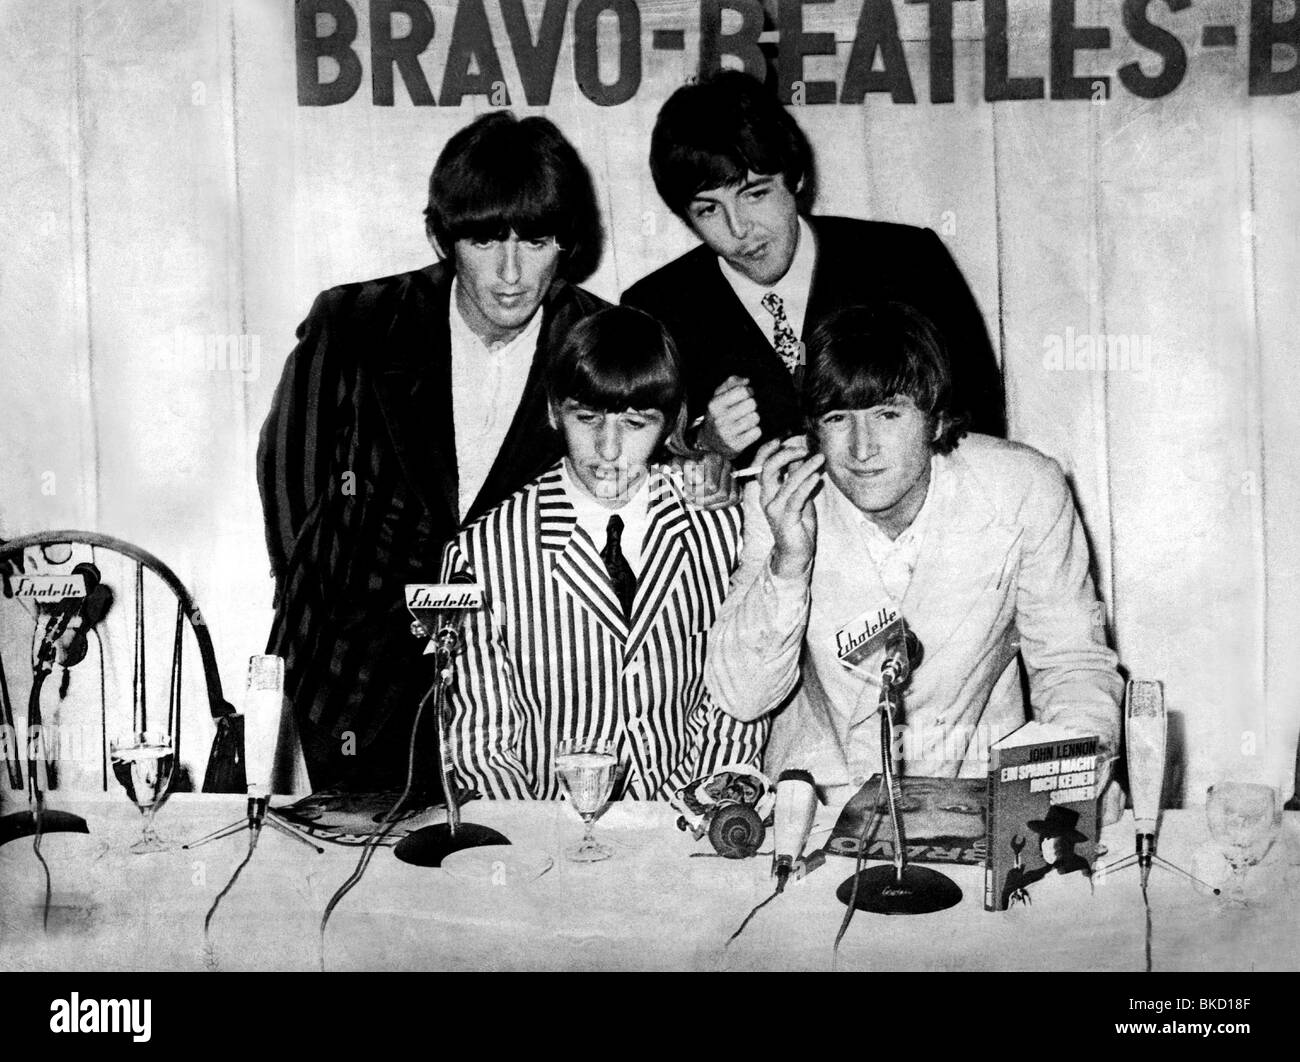 Beatles, 1960 - 1970, British rock band, Paul McCartney, John Lennon Ringo Starr and George Harrison, press conference, 'Bravo Blitz Tour', Munich, 14.9.1966, , Stock Photo